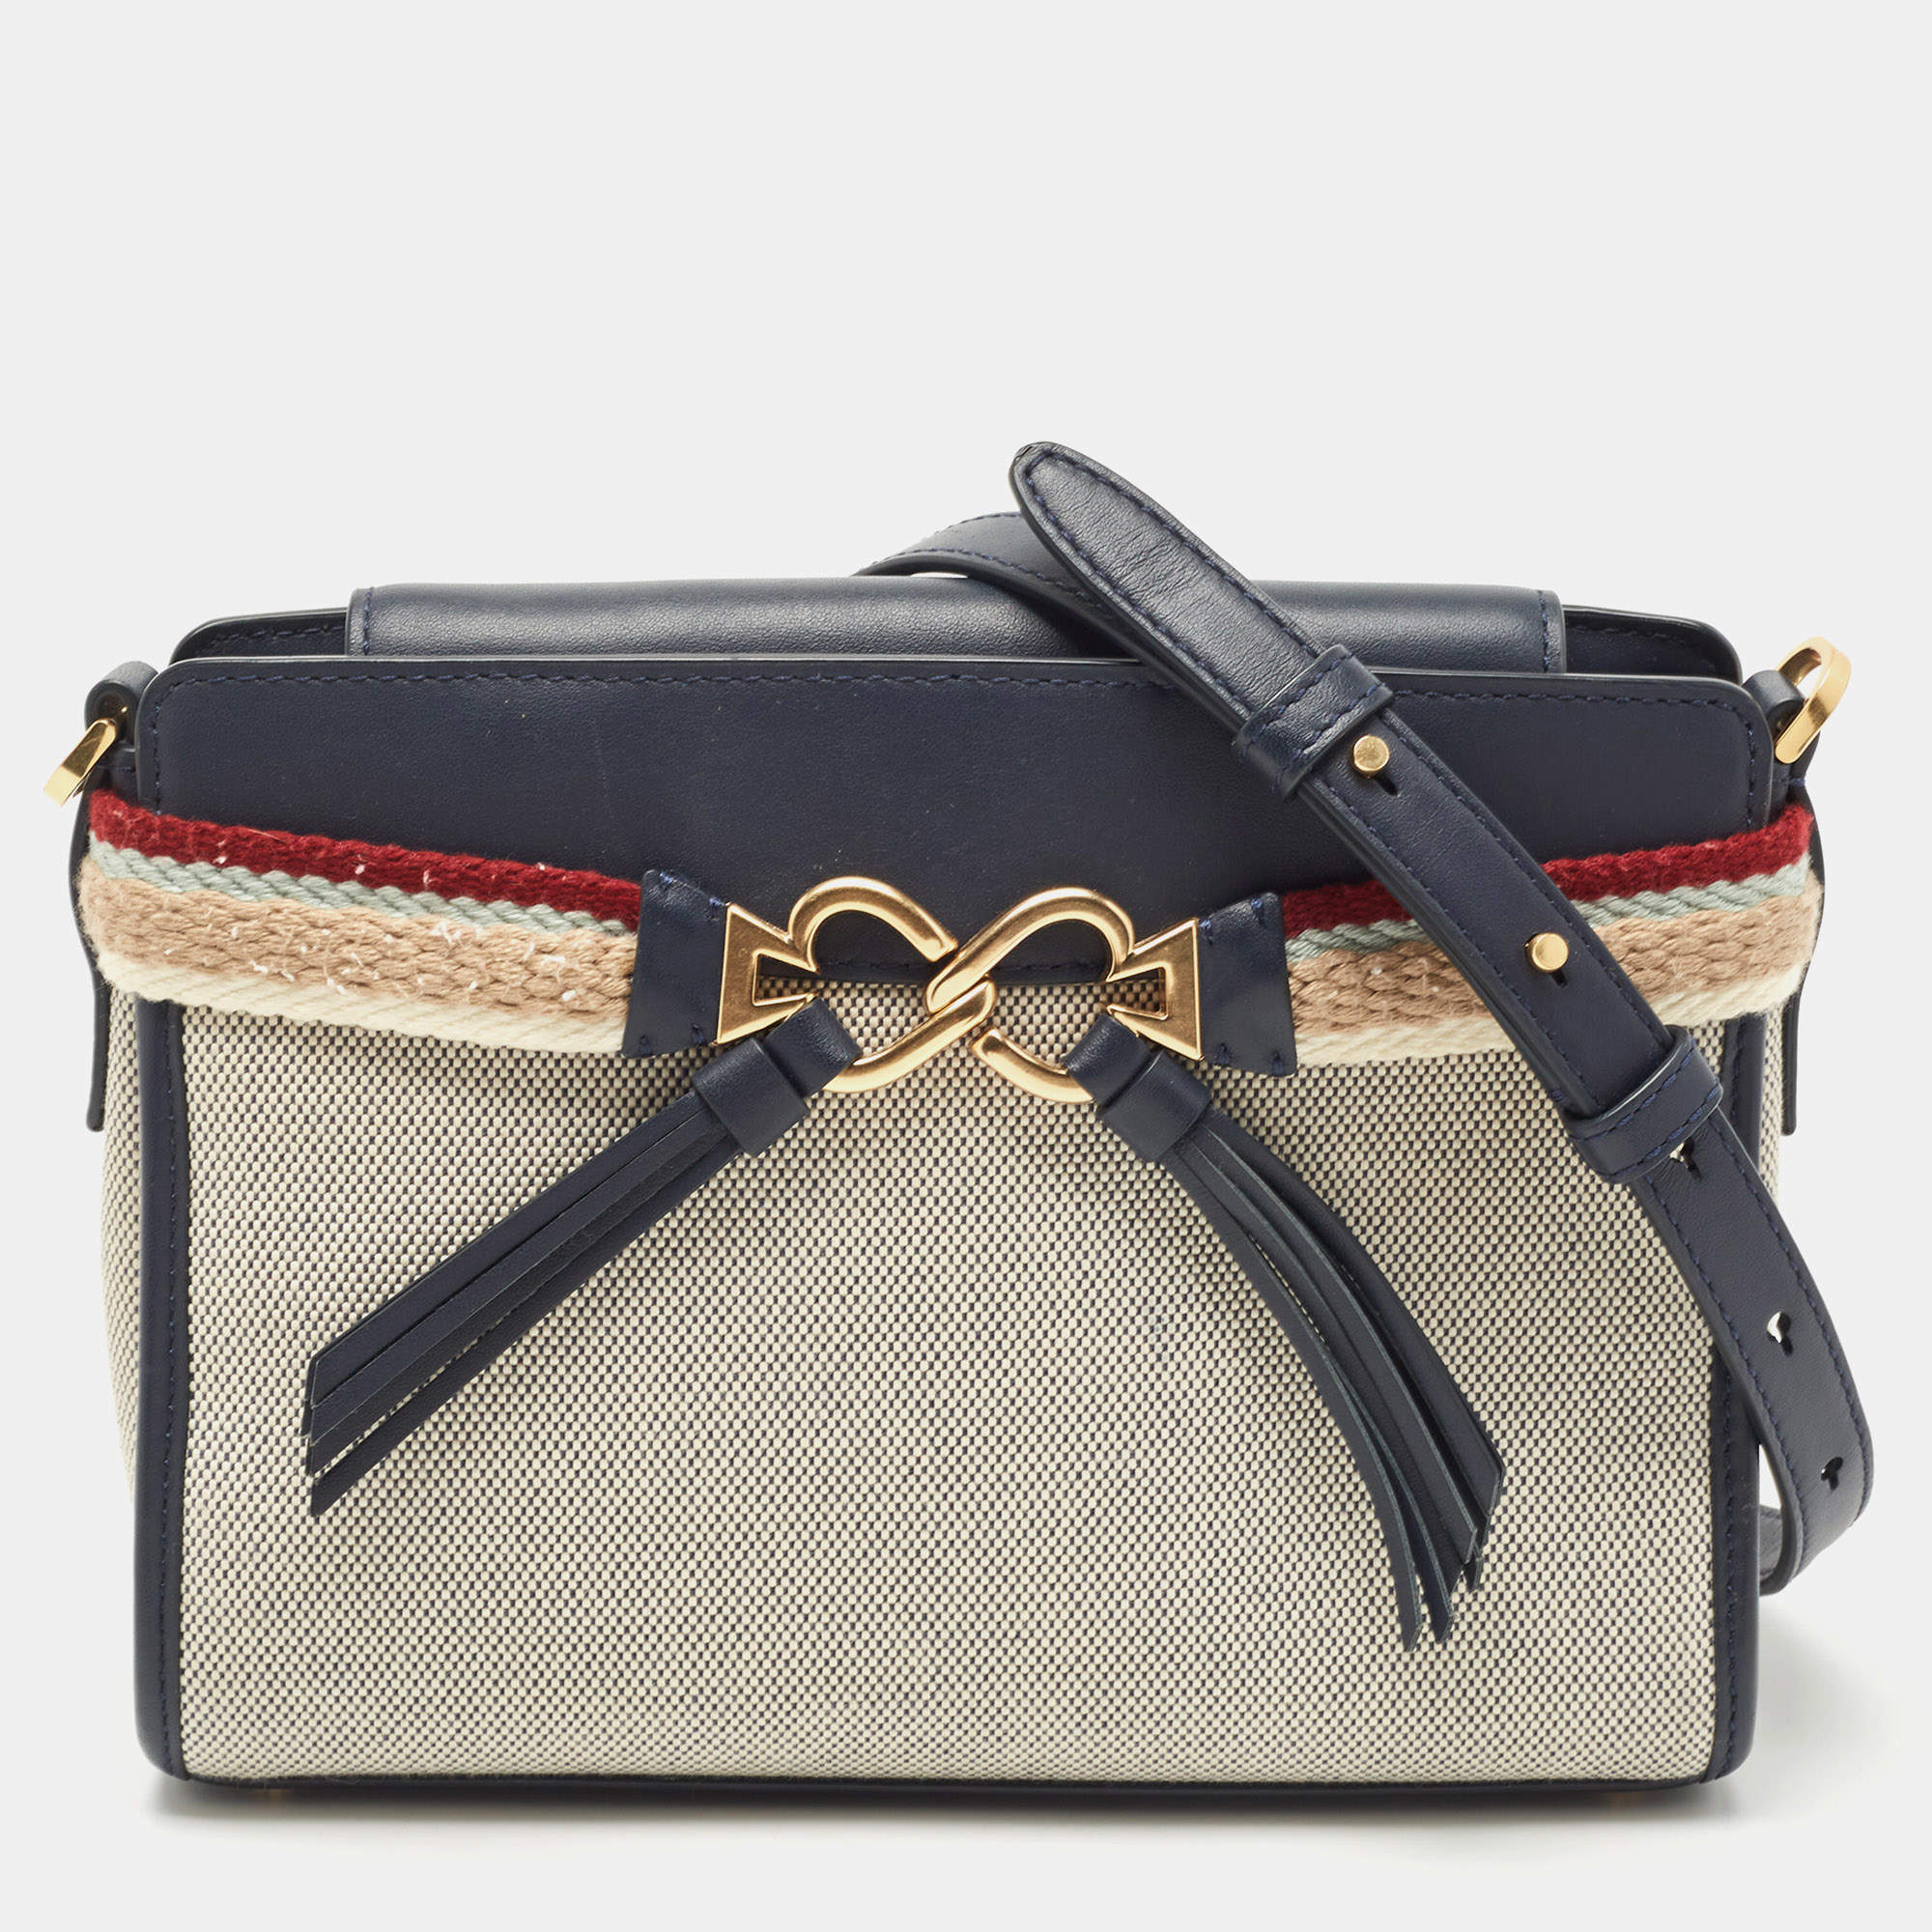 Kate Spade Brown Leather Medium Toujour Crossbody Bag Kate Spade | The  Luxury Closet